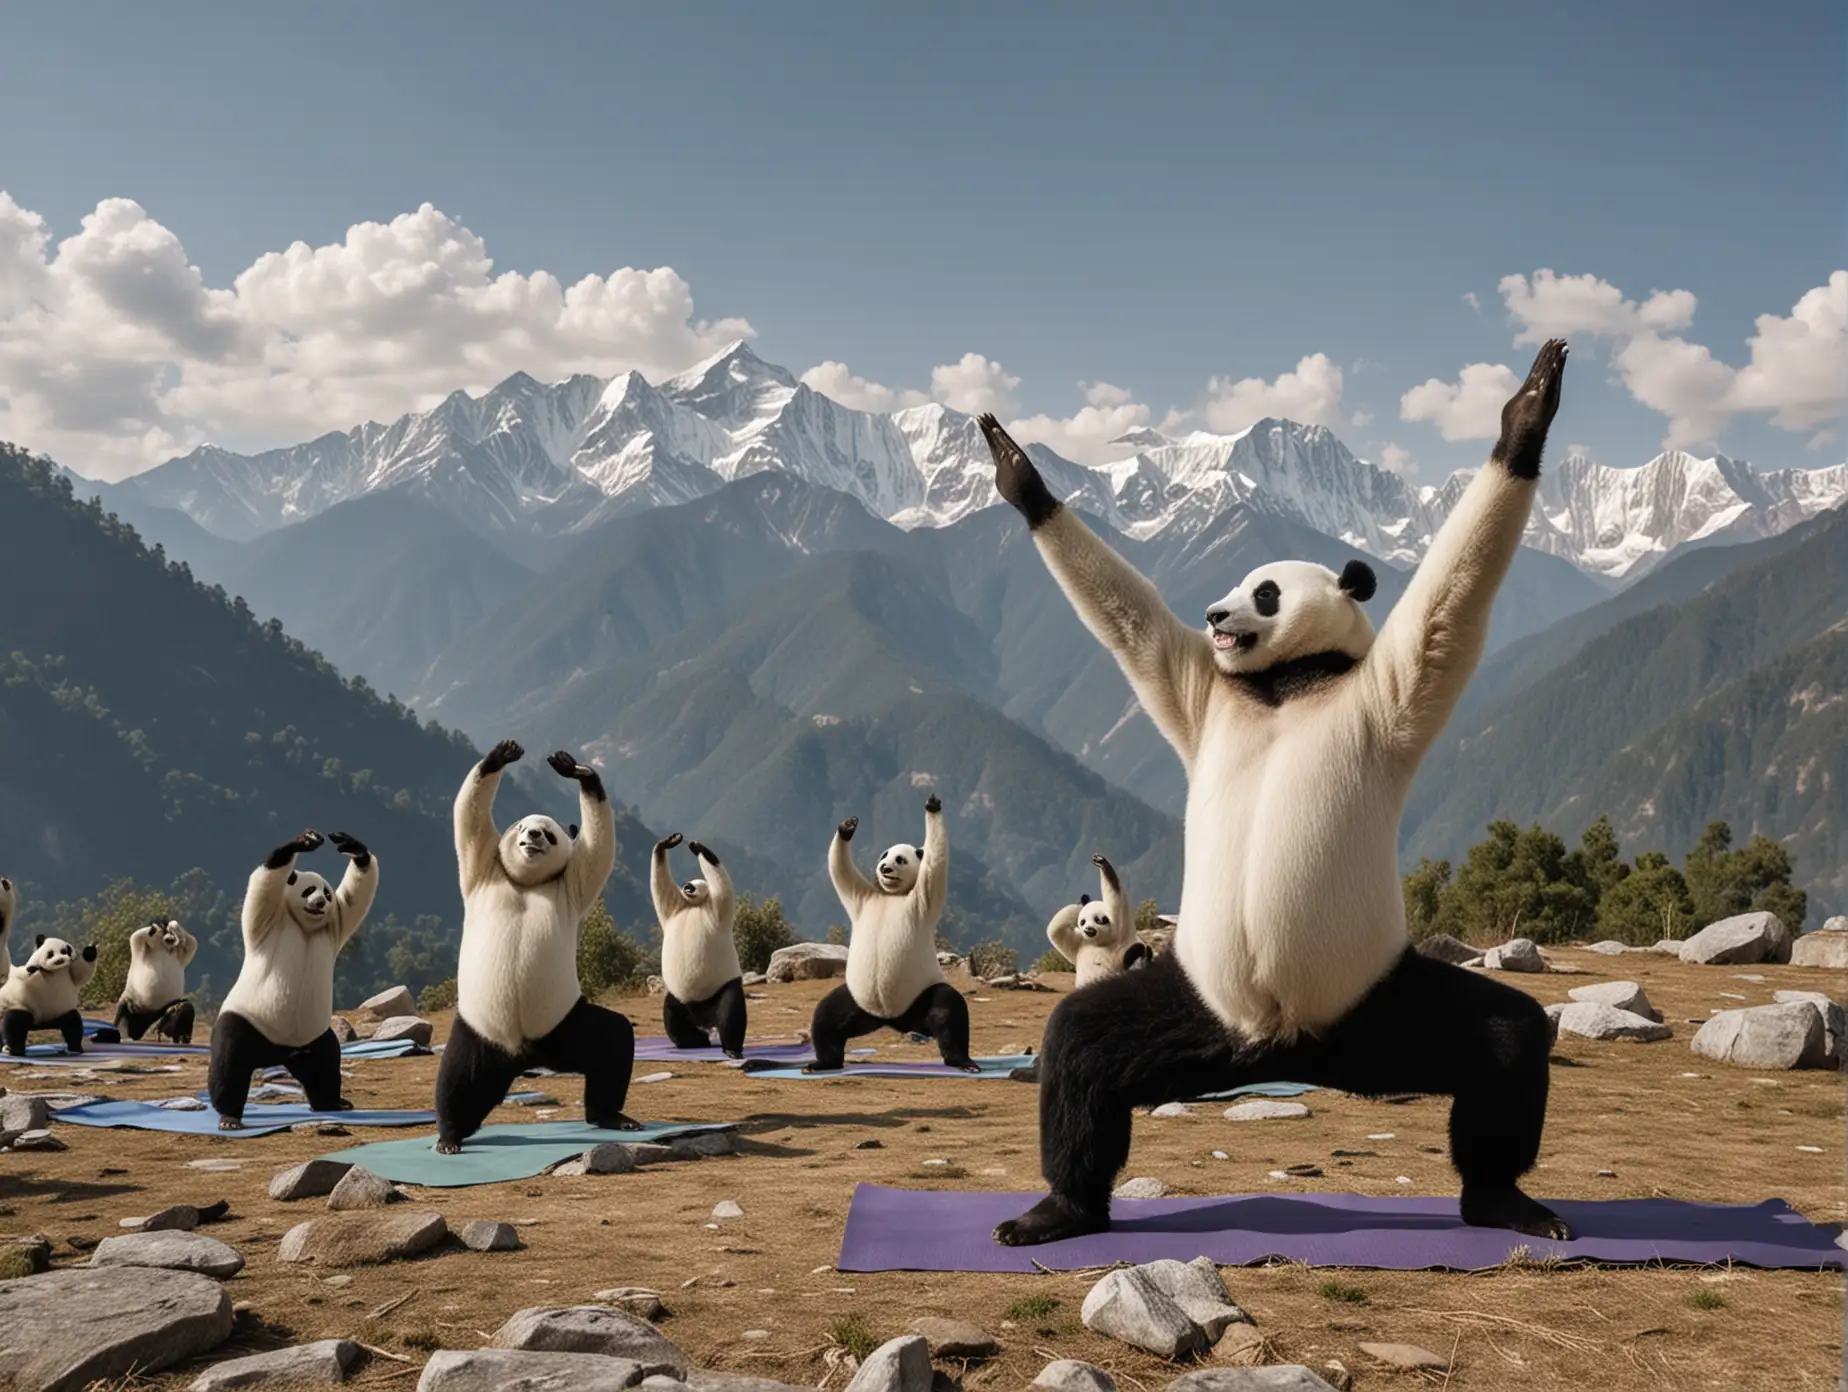 pandas doing yoga on a mountaintop in the Himalayas